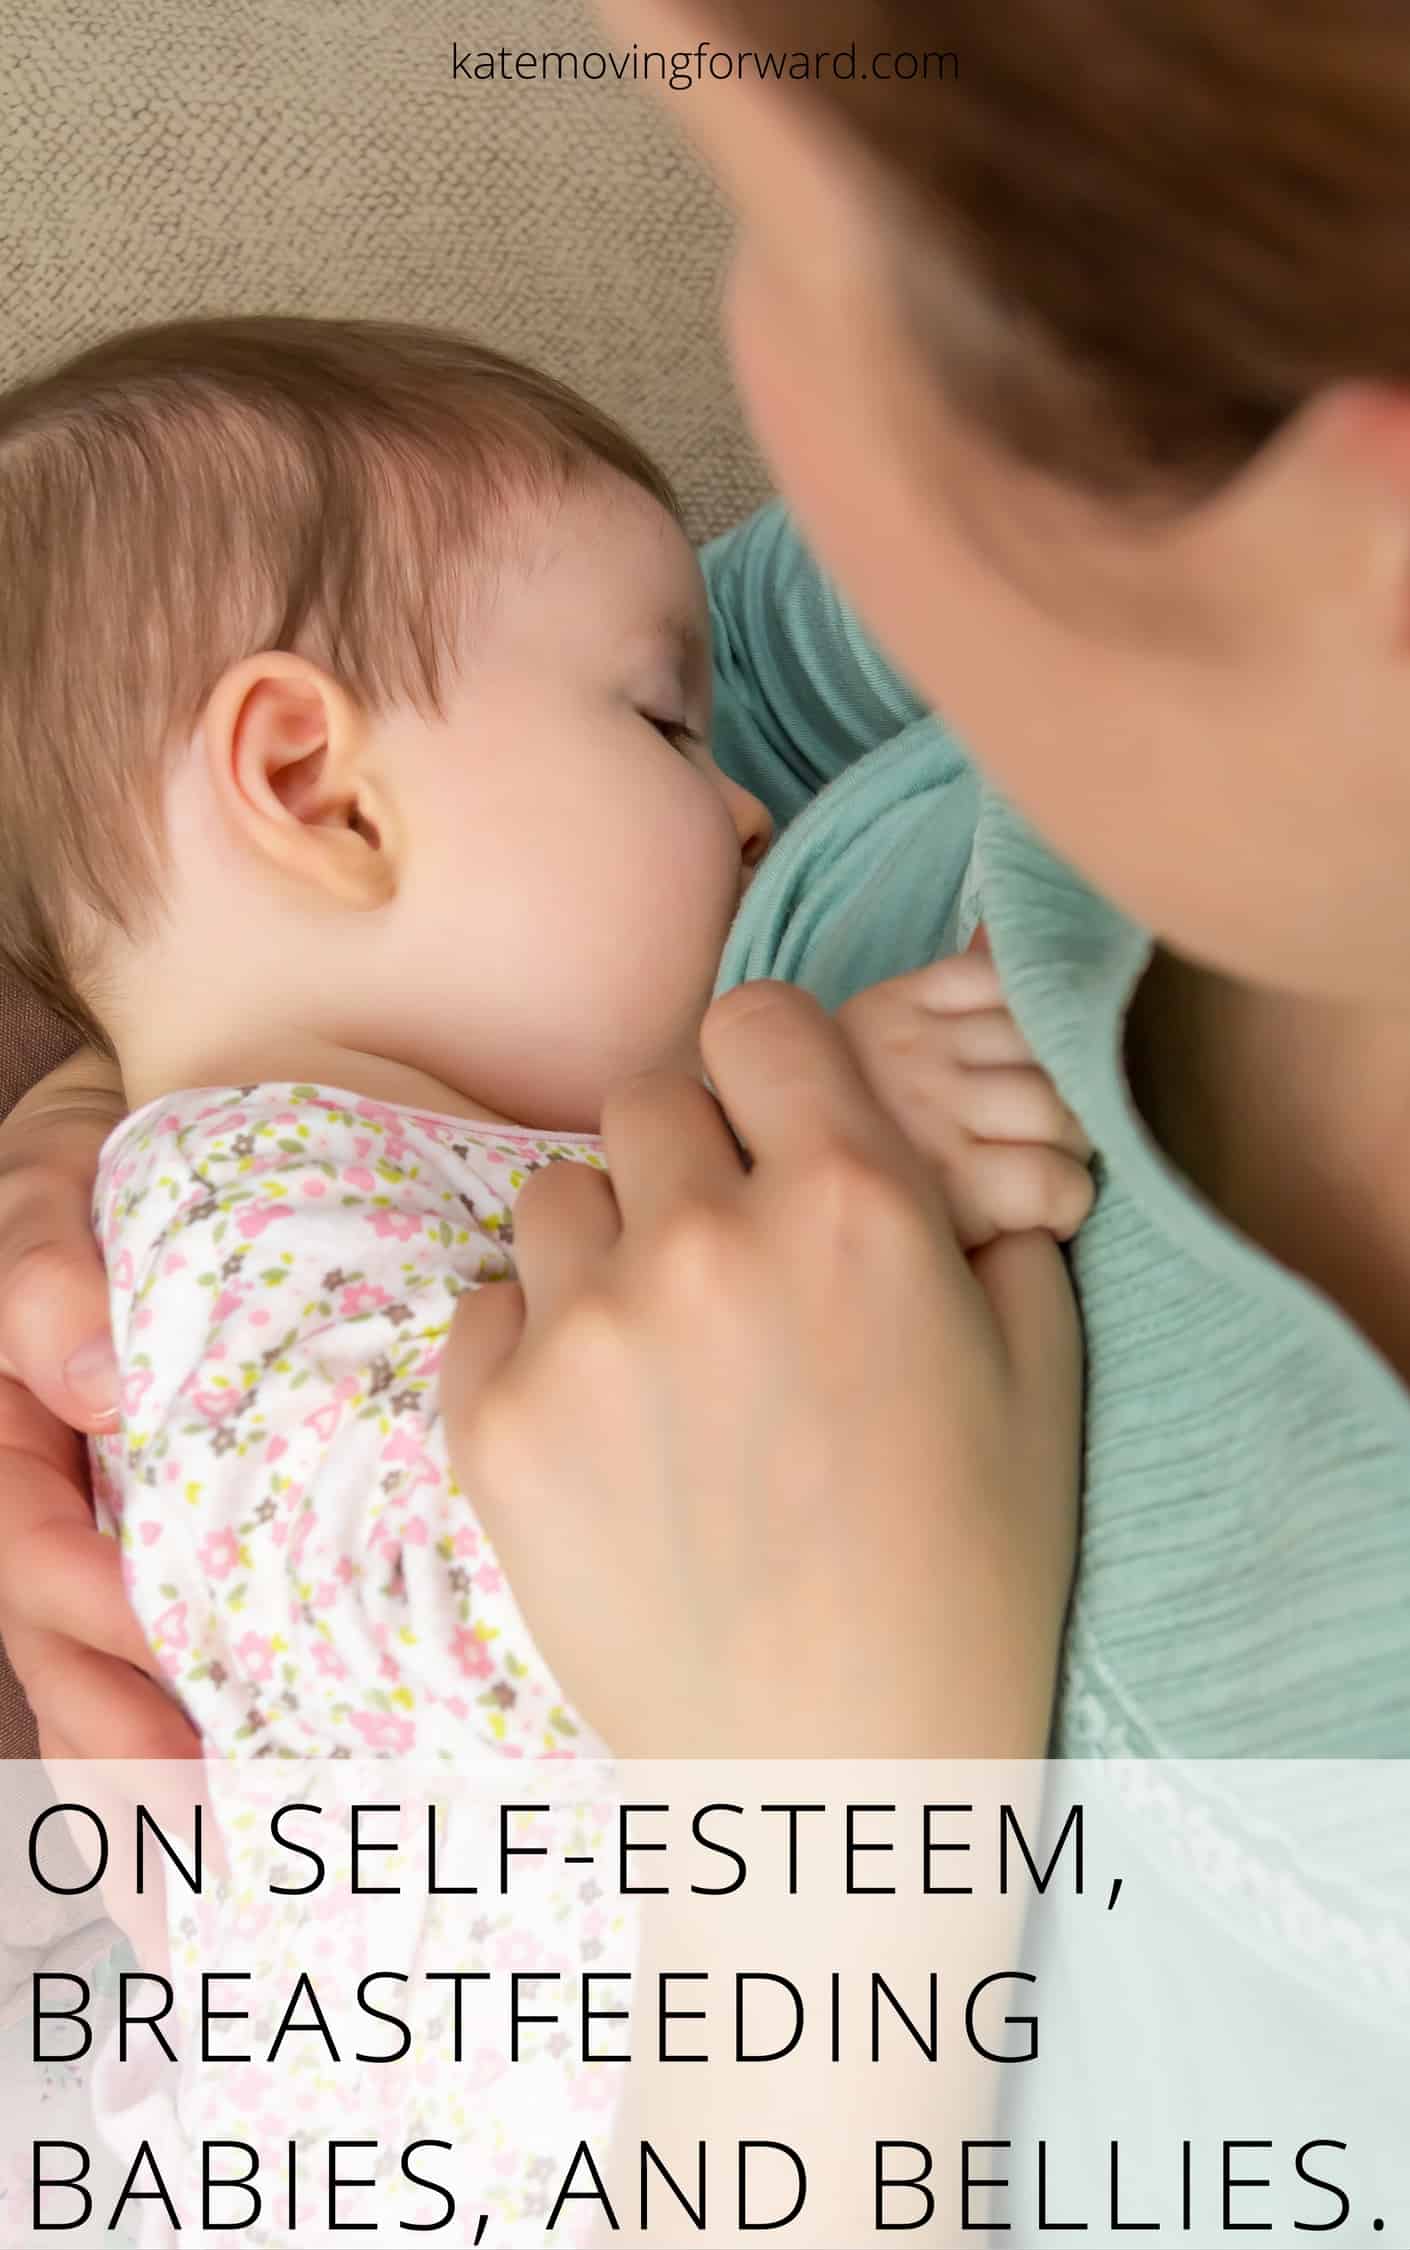 On Self-Esteem, Breastfeeding, Babies, and Bellies.